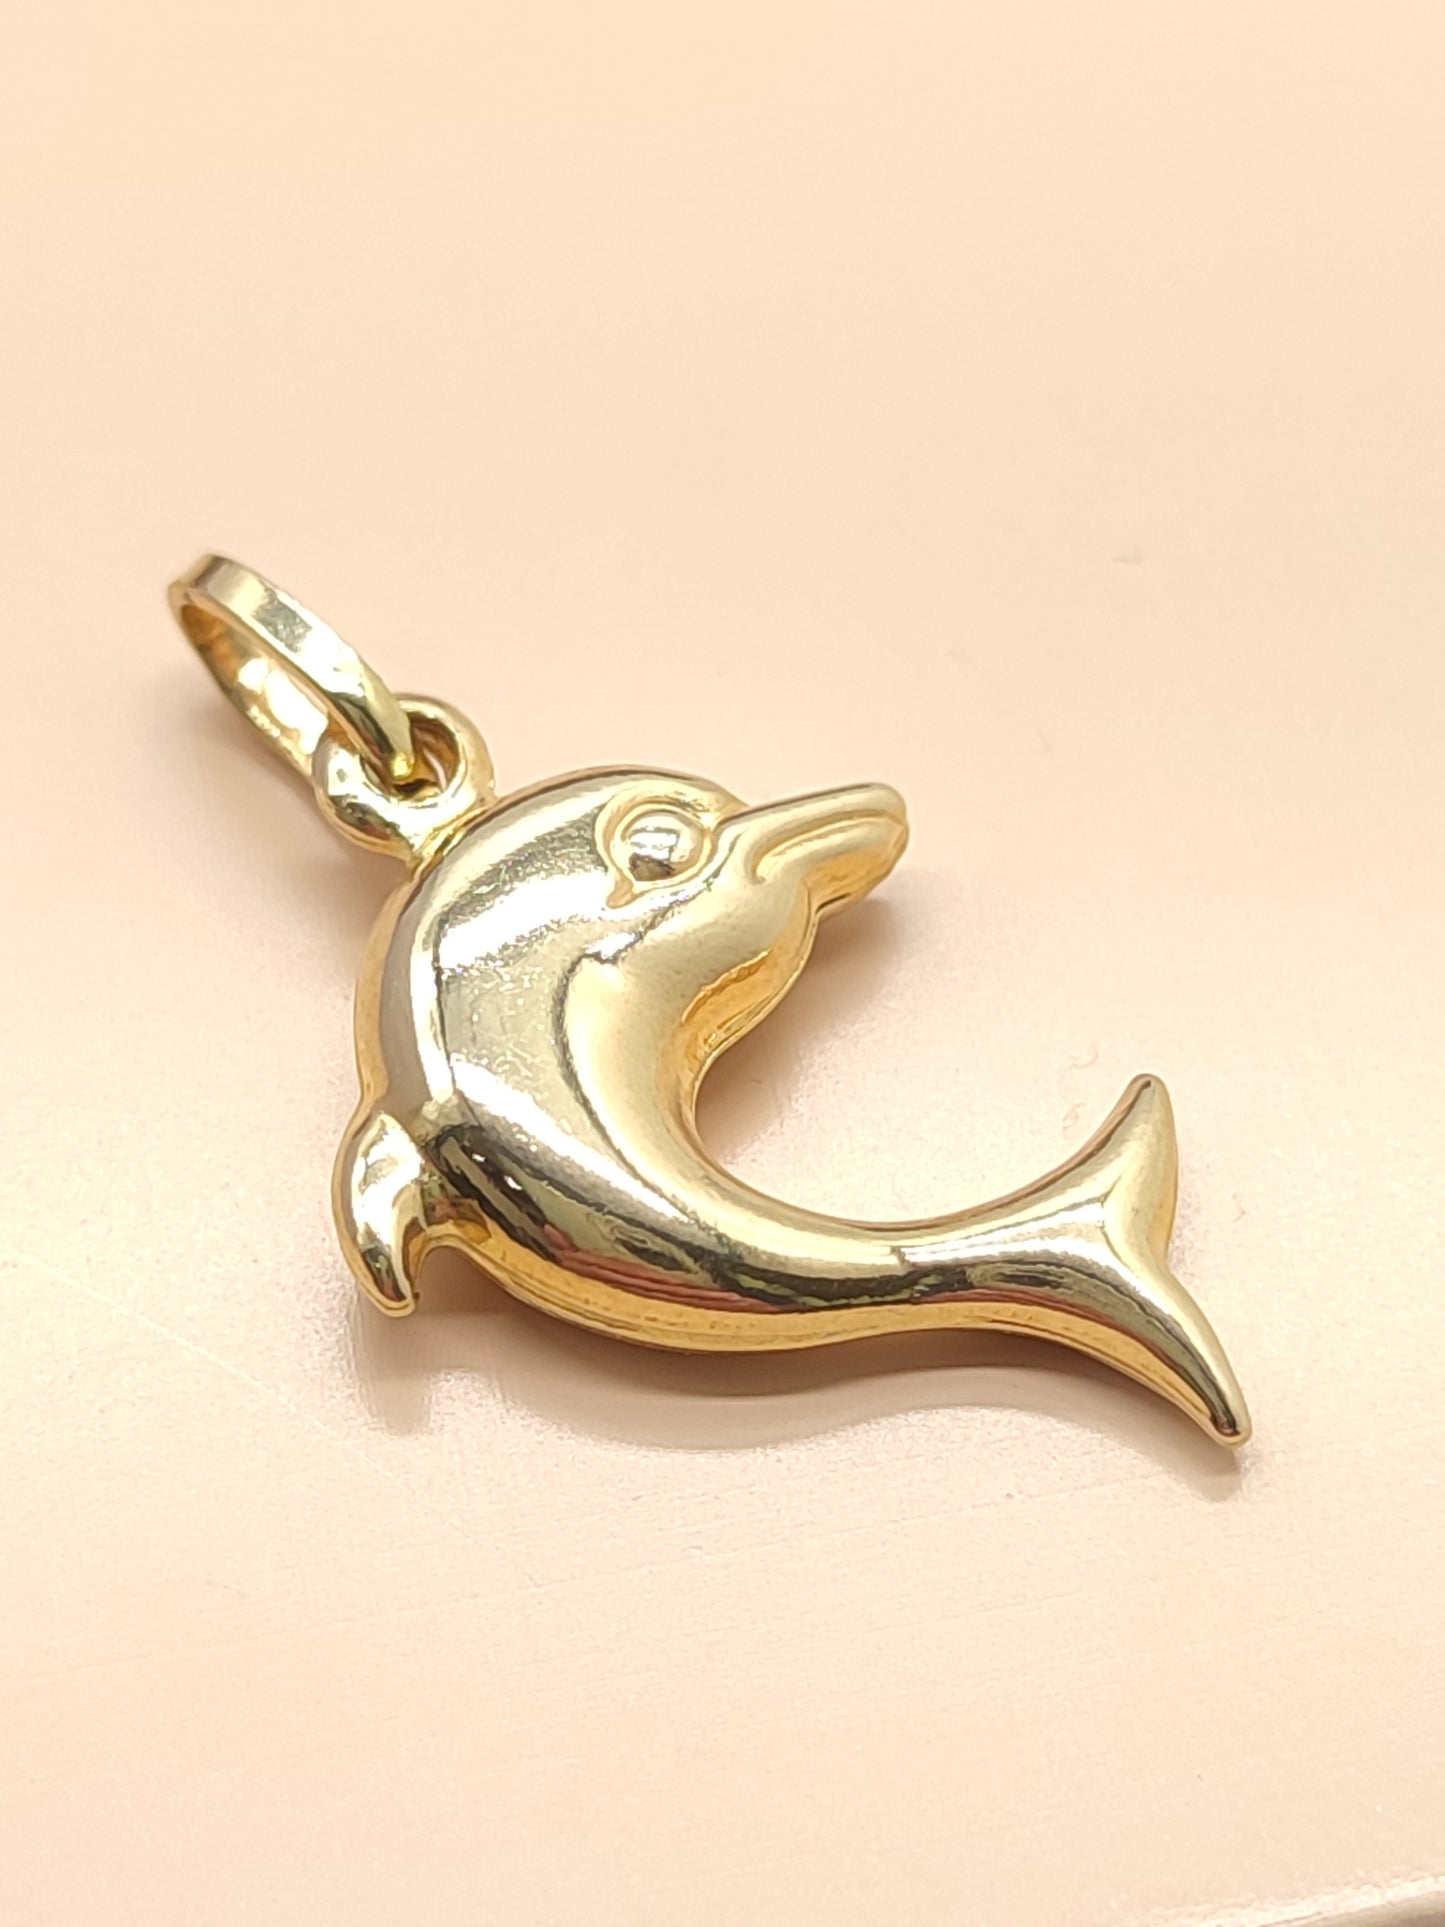 Dolphin gold pendant